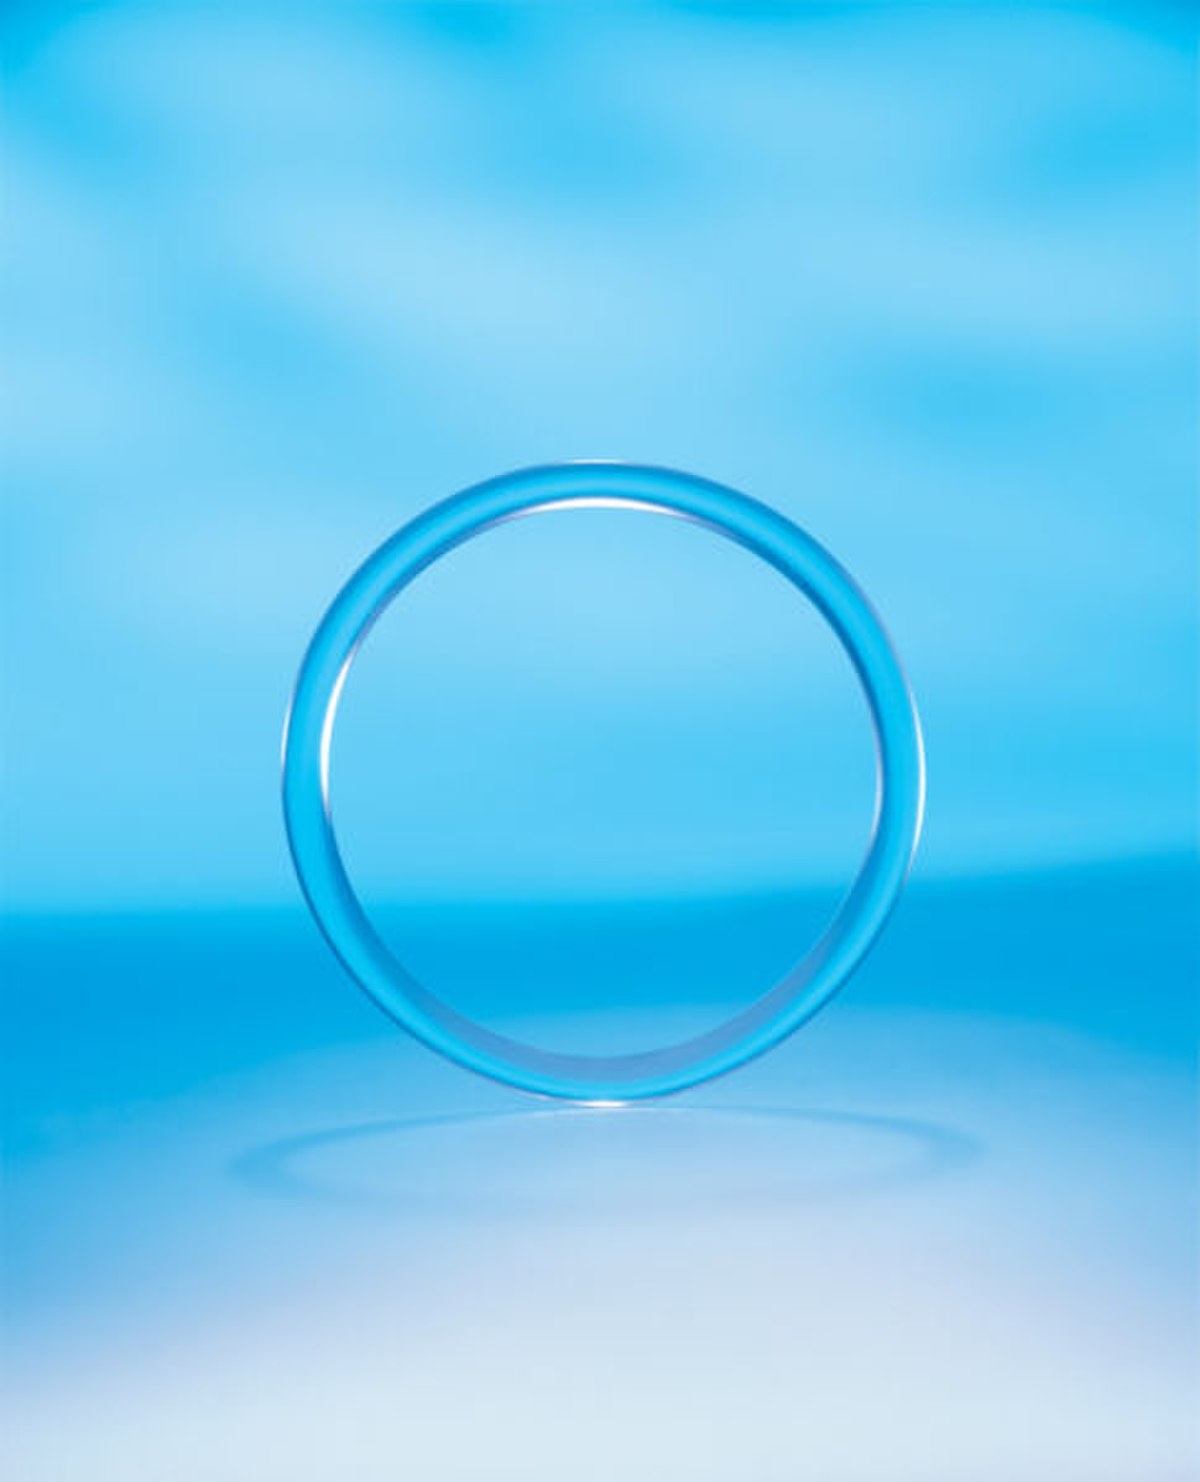 Ici un anneau vaginal Nuvaring (contraceptif estro-progestatif)